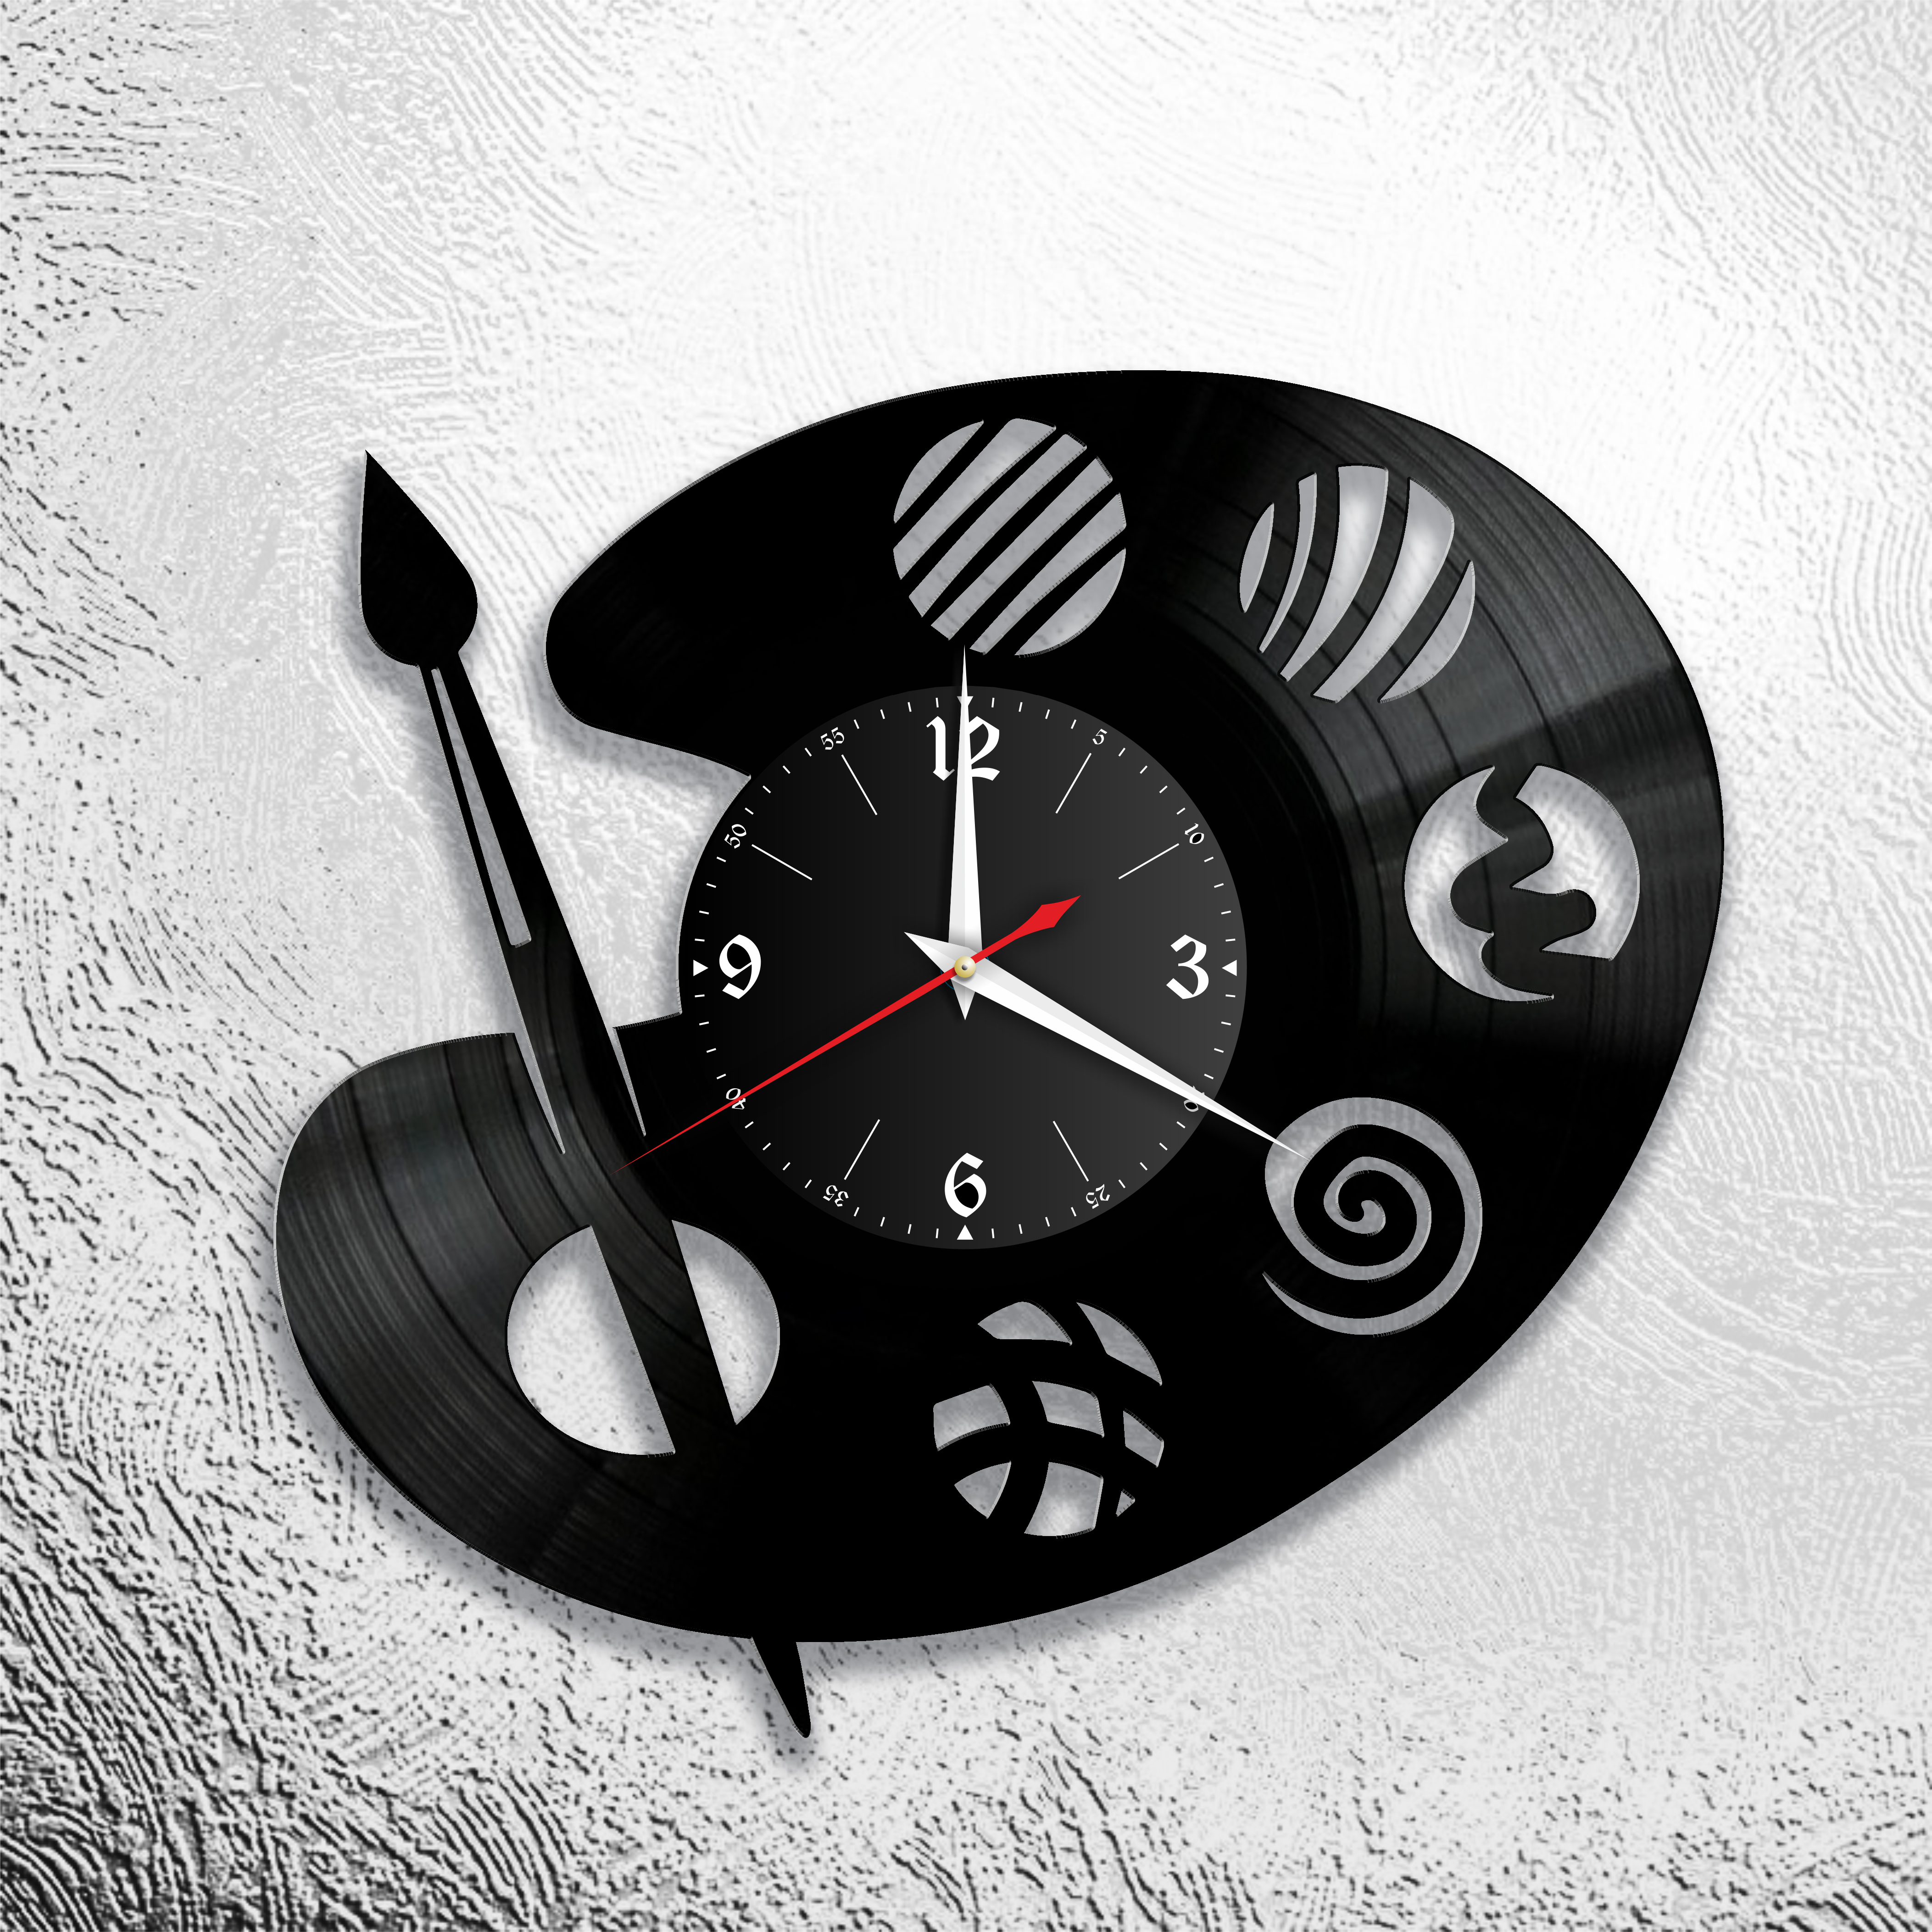 Настенные часы сайты. Часы настенные. Необычные часы. Оригинальные настенные часы. Дизайнерские часы.